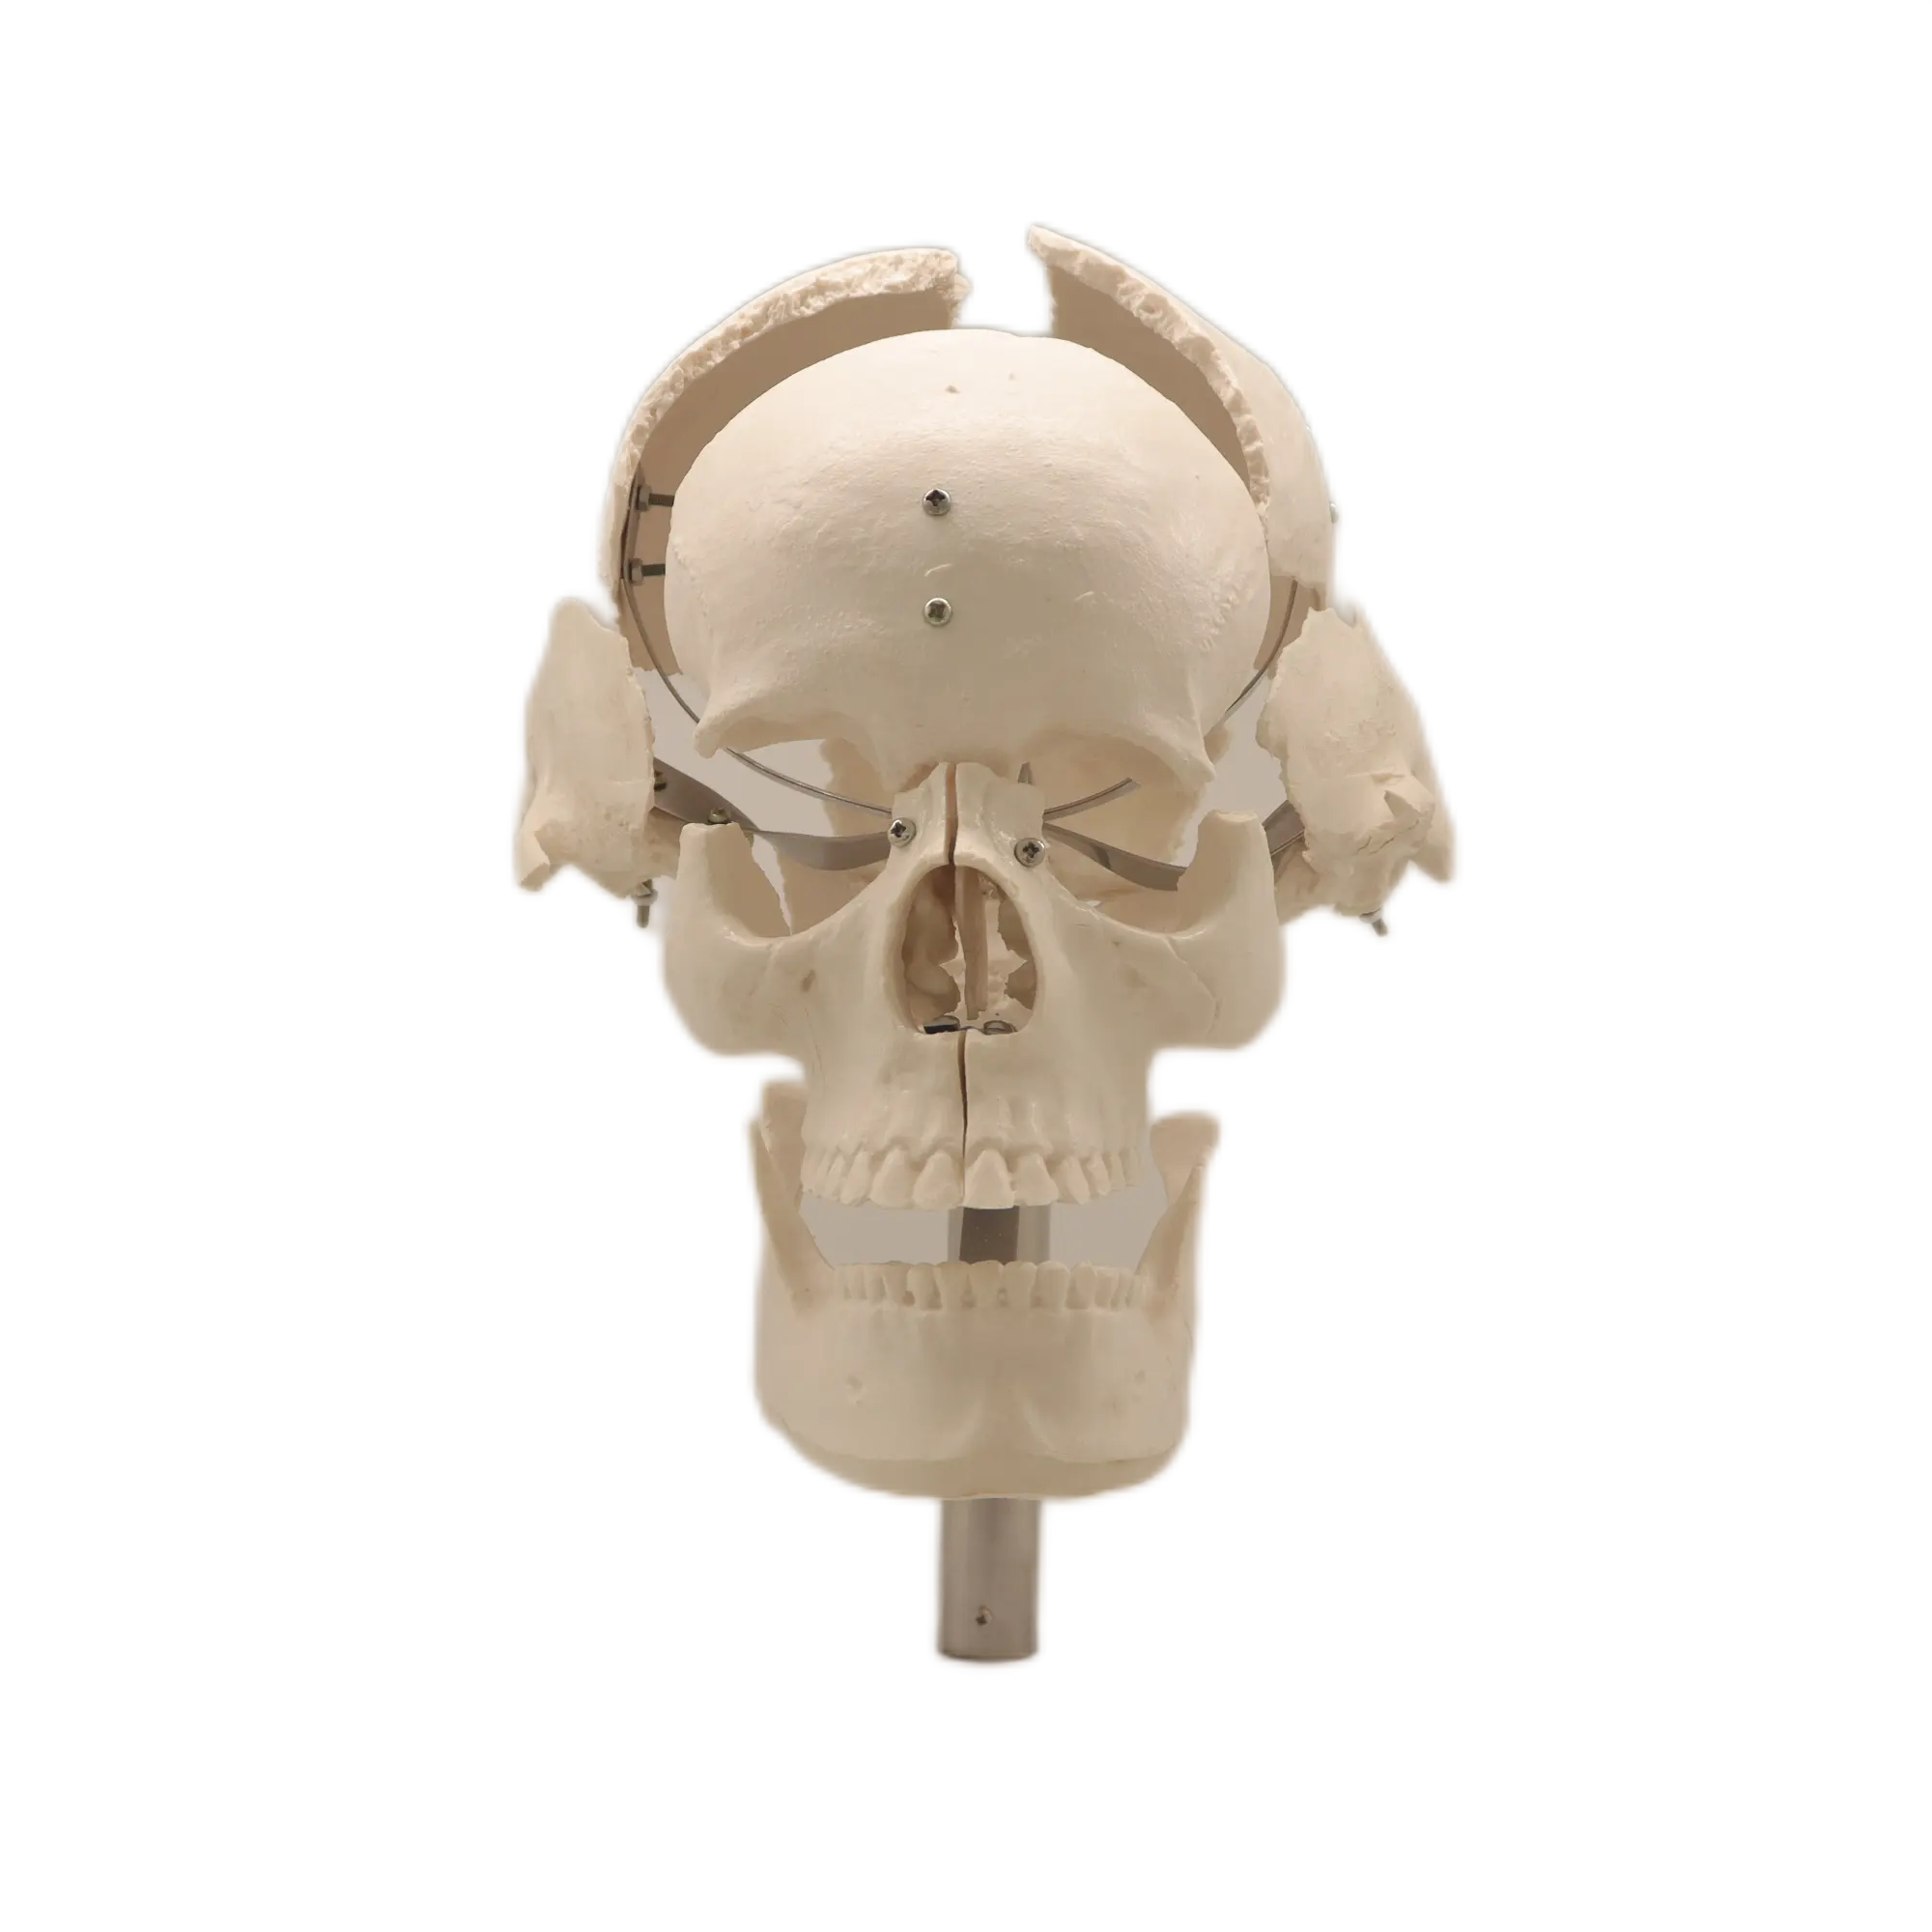 Modelo anatómico humano de PVC médico OrthoCare de alta calidad 30*24*43 CM MODELO DE PVC del cráneo humano separado